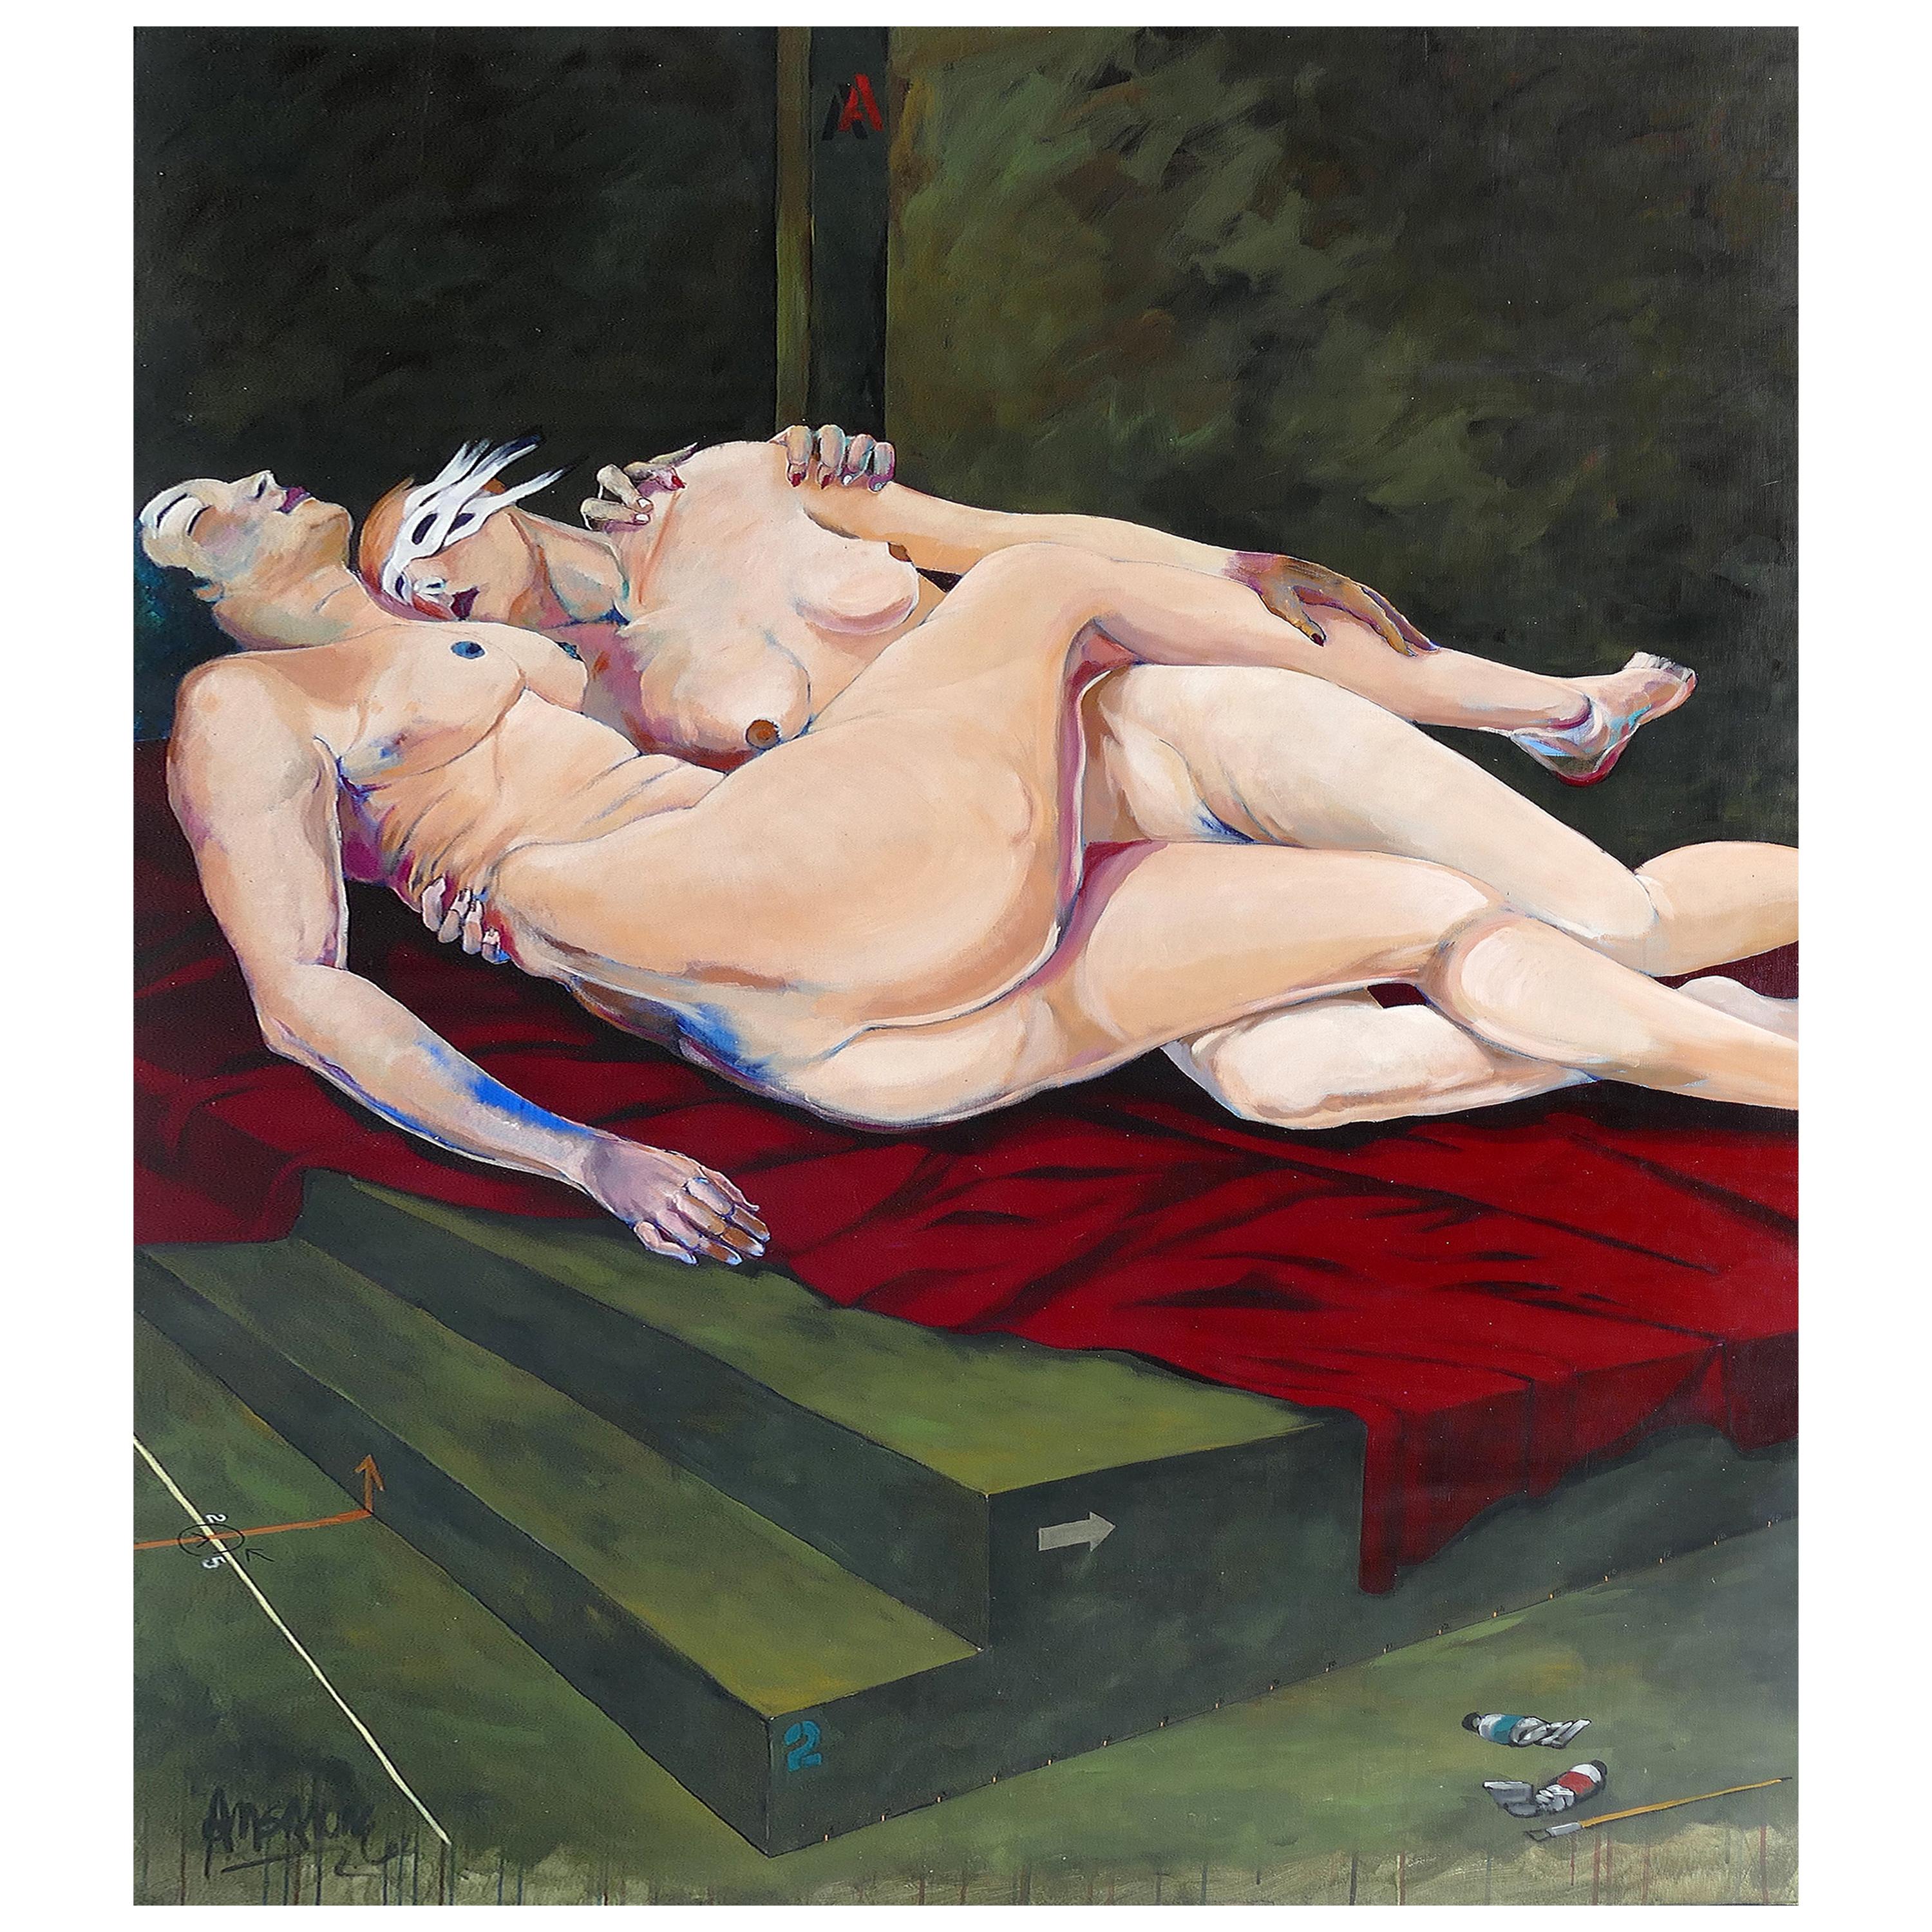 Monumental Jose Mario Ansalone "Lovers" Oil Painting on Canvas, Argentine Artist